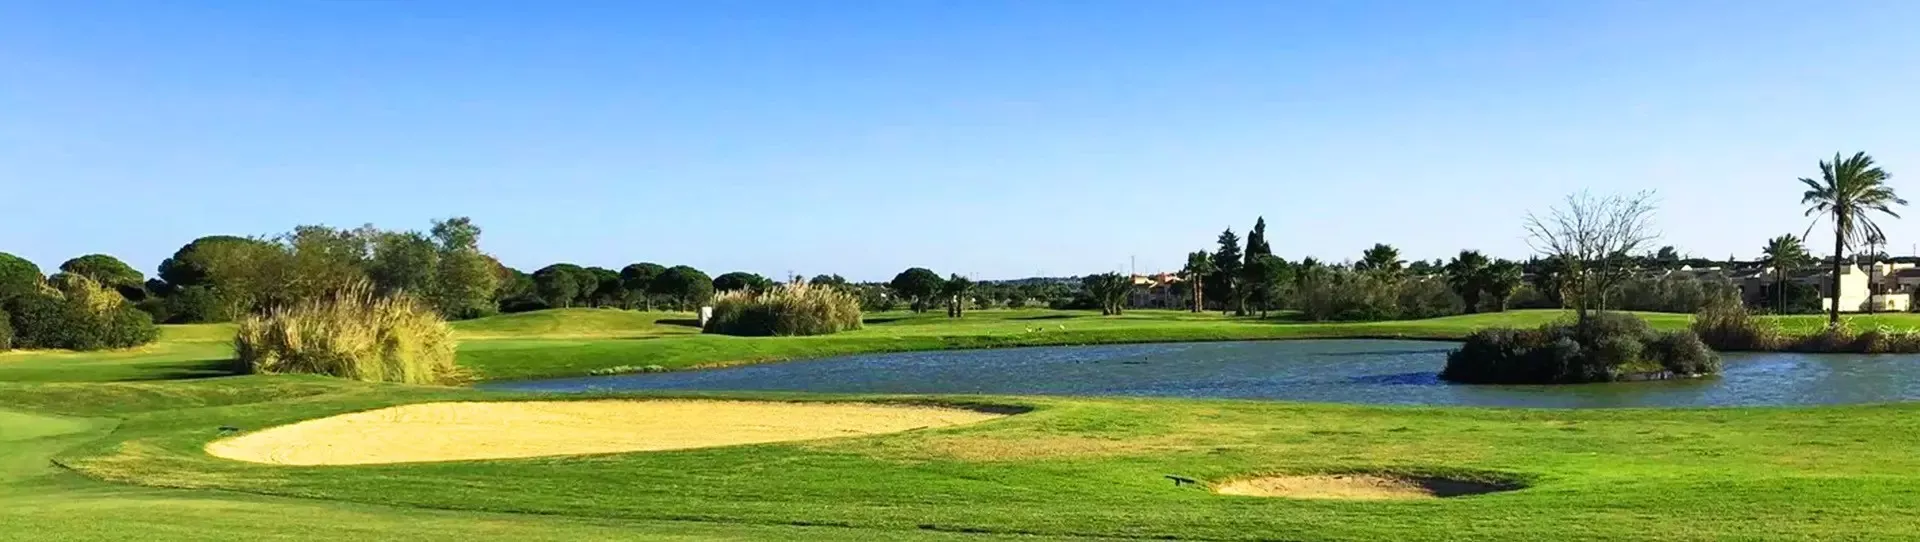 Spain golf courses - Villanueva Golf & Croquet - Photo 1